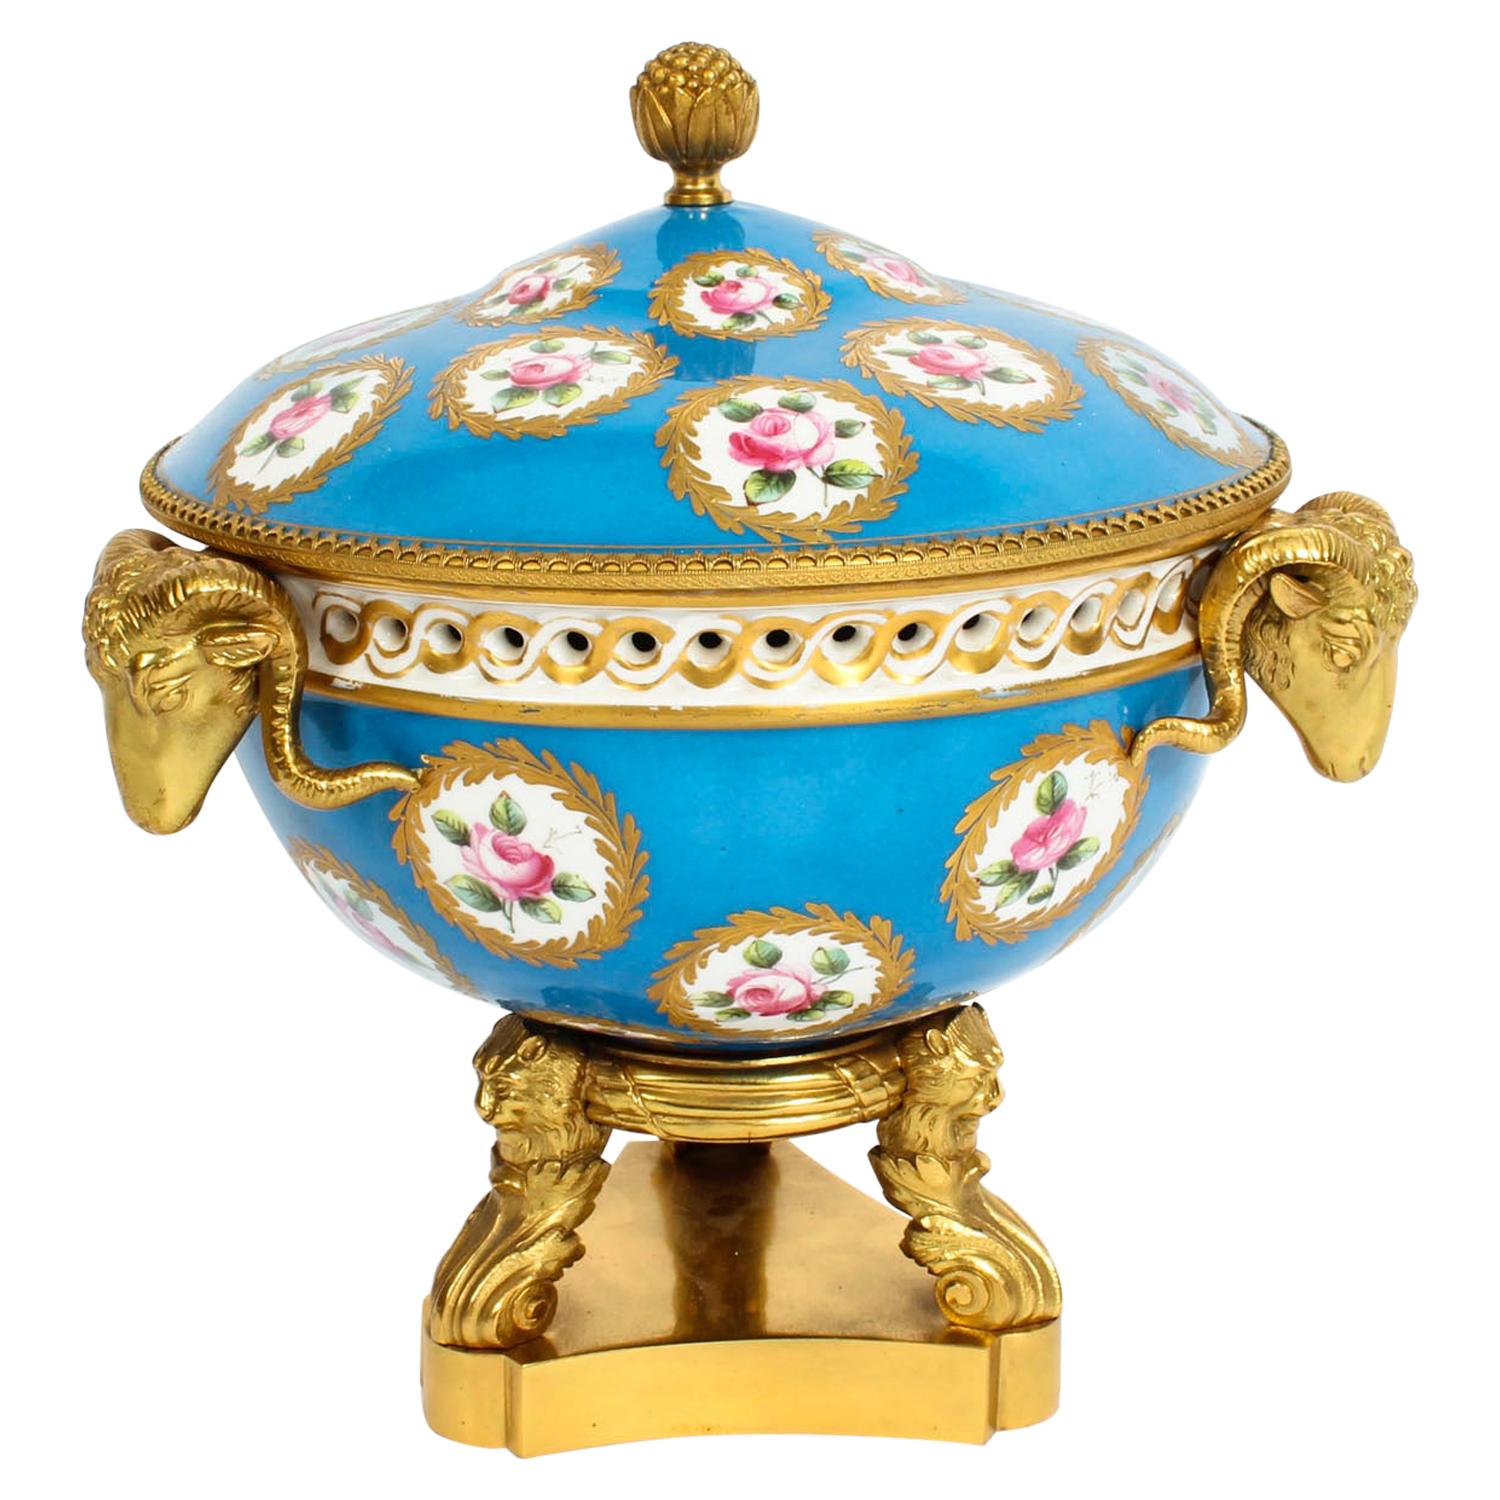 Antique Ormolu Mounted Bleu Celeste Sevres Porcelain Centrepiece, 19th Century